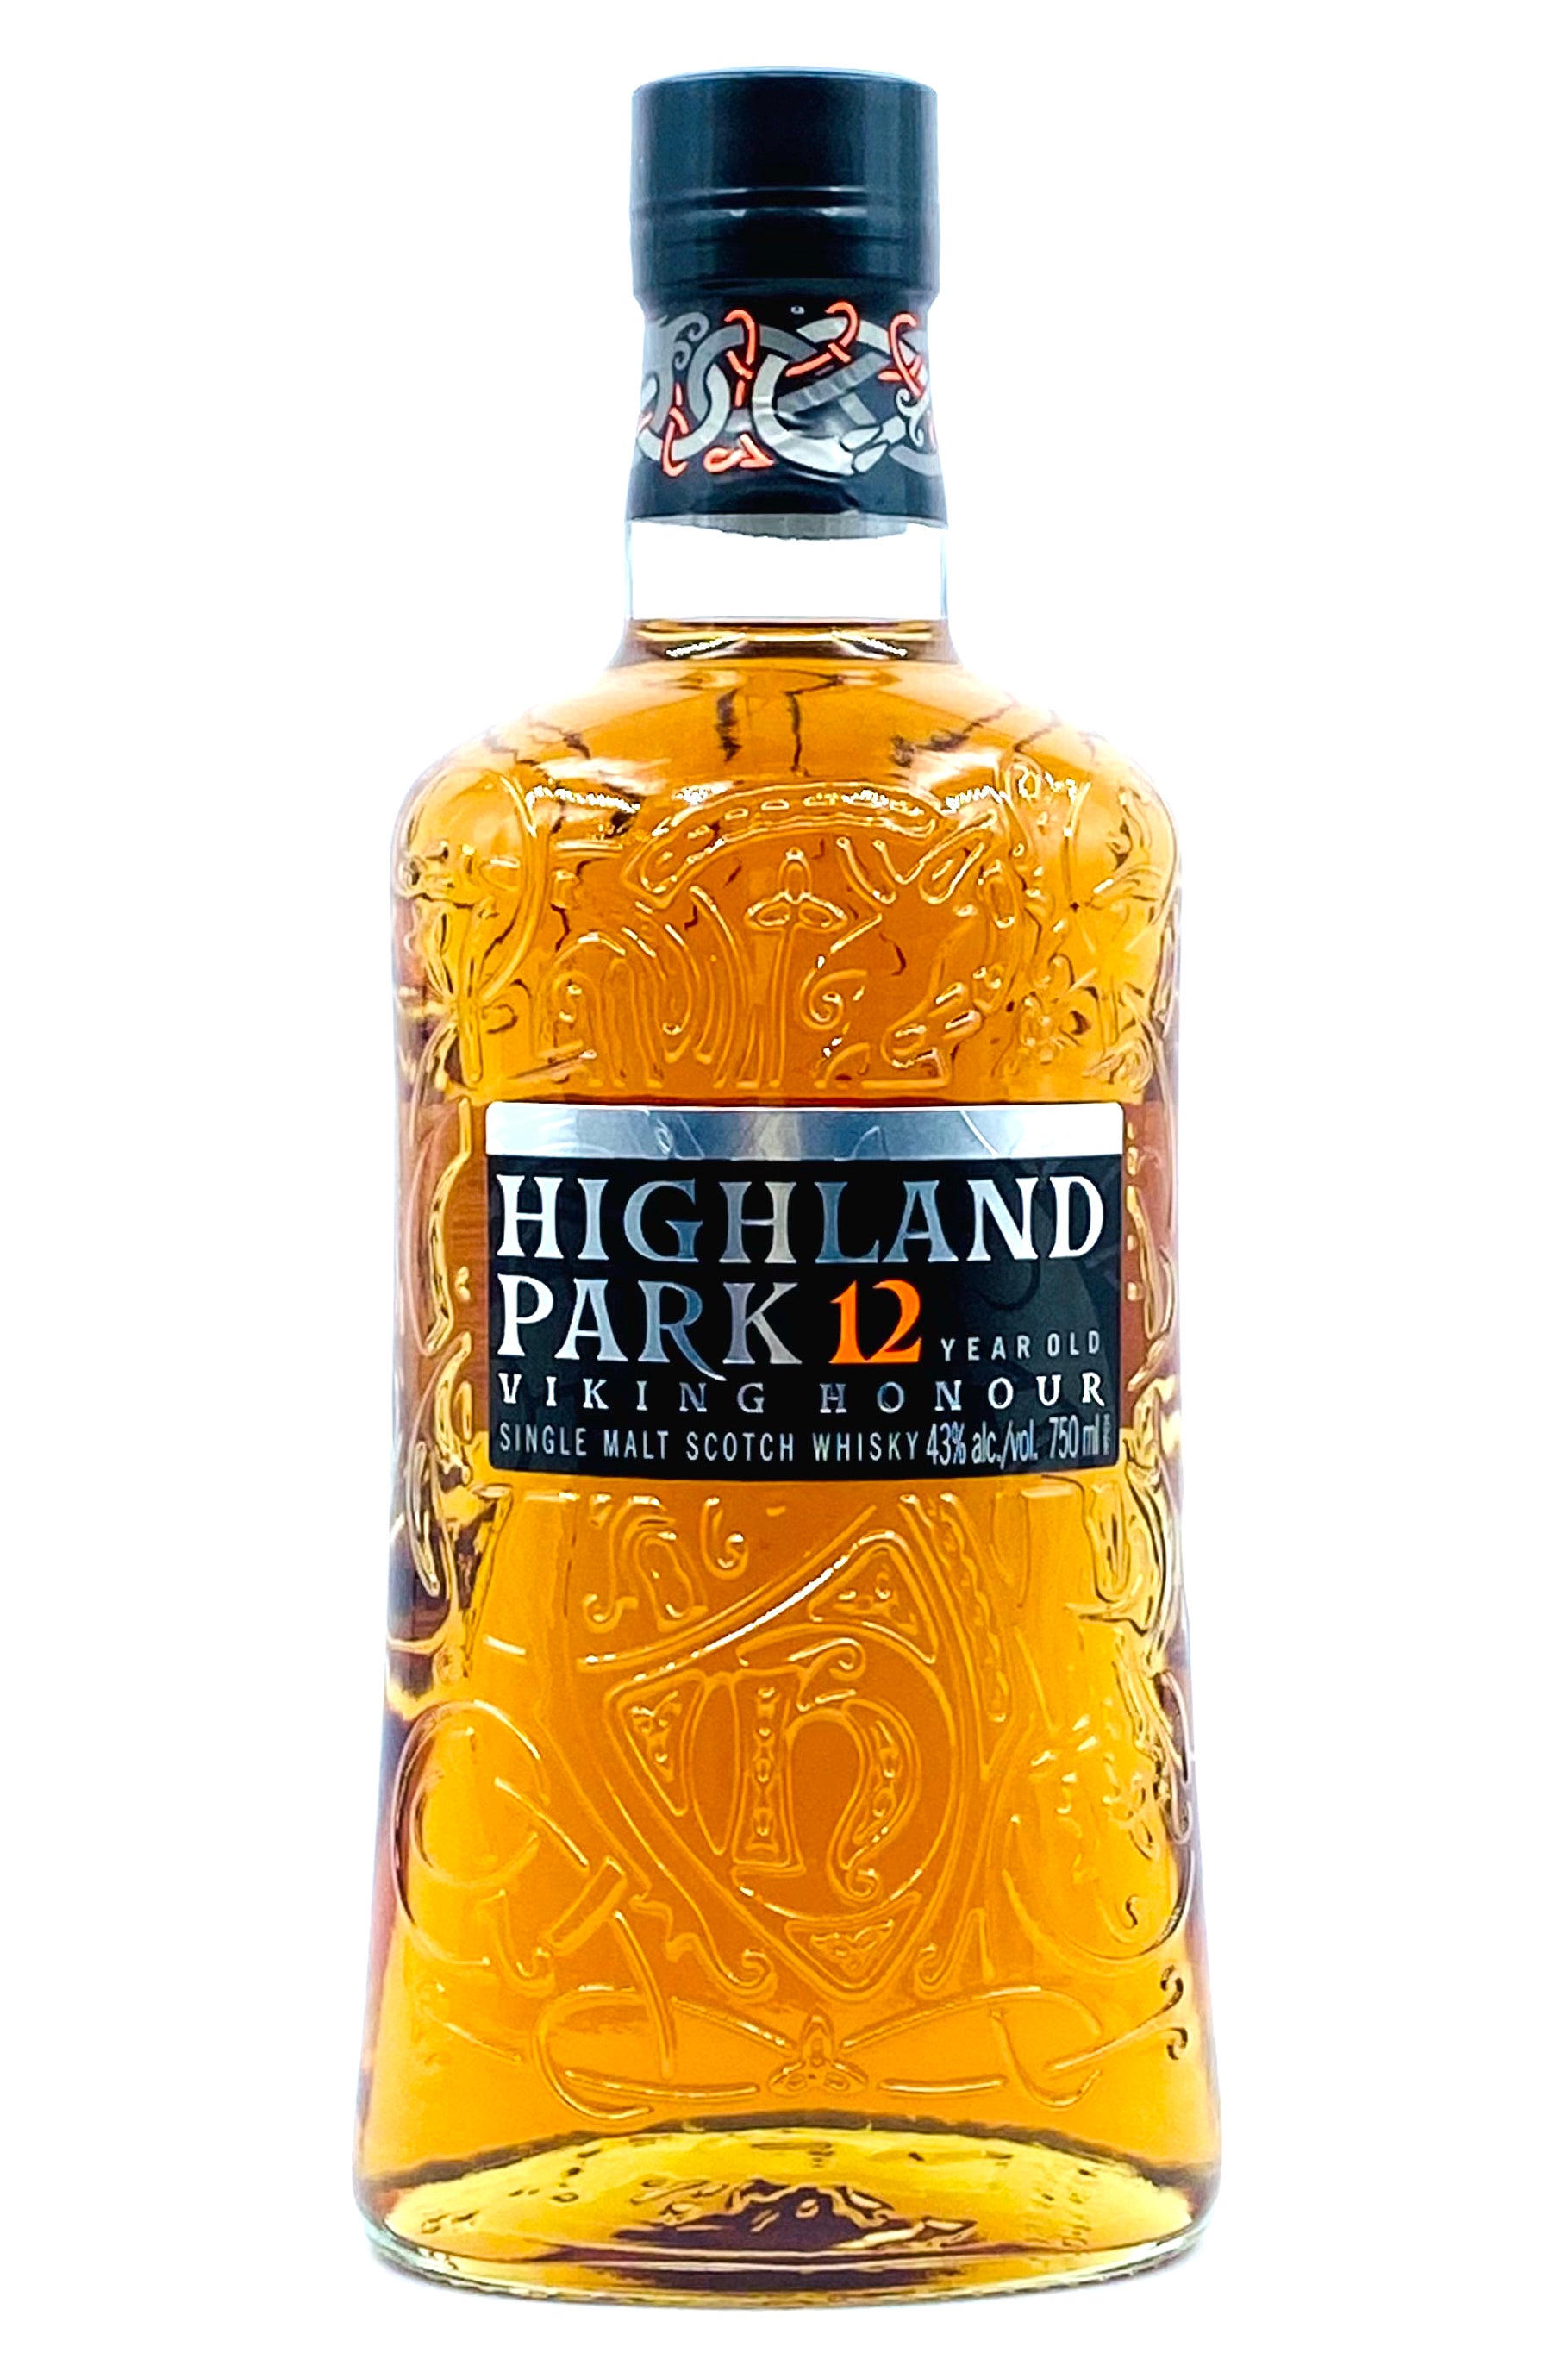 Buy Highland Park 12 Year Old Viking Honour Scotch Whisky Online